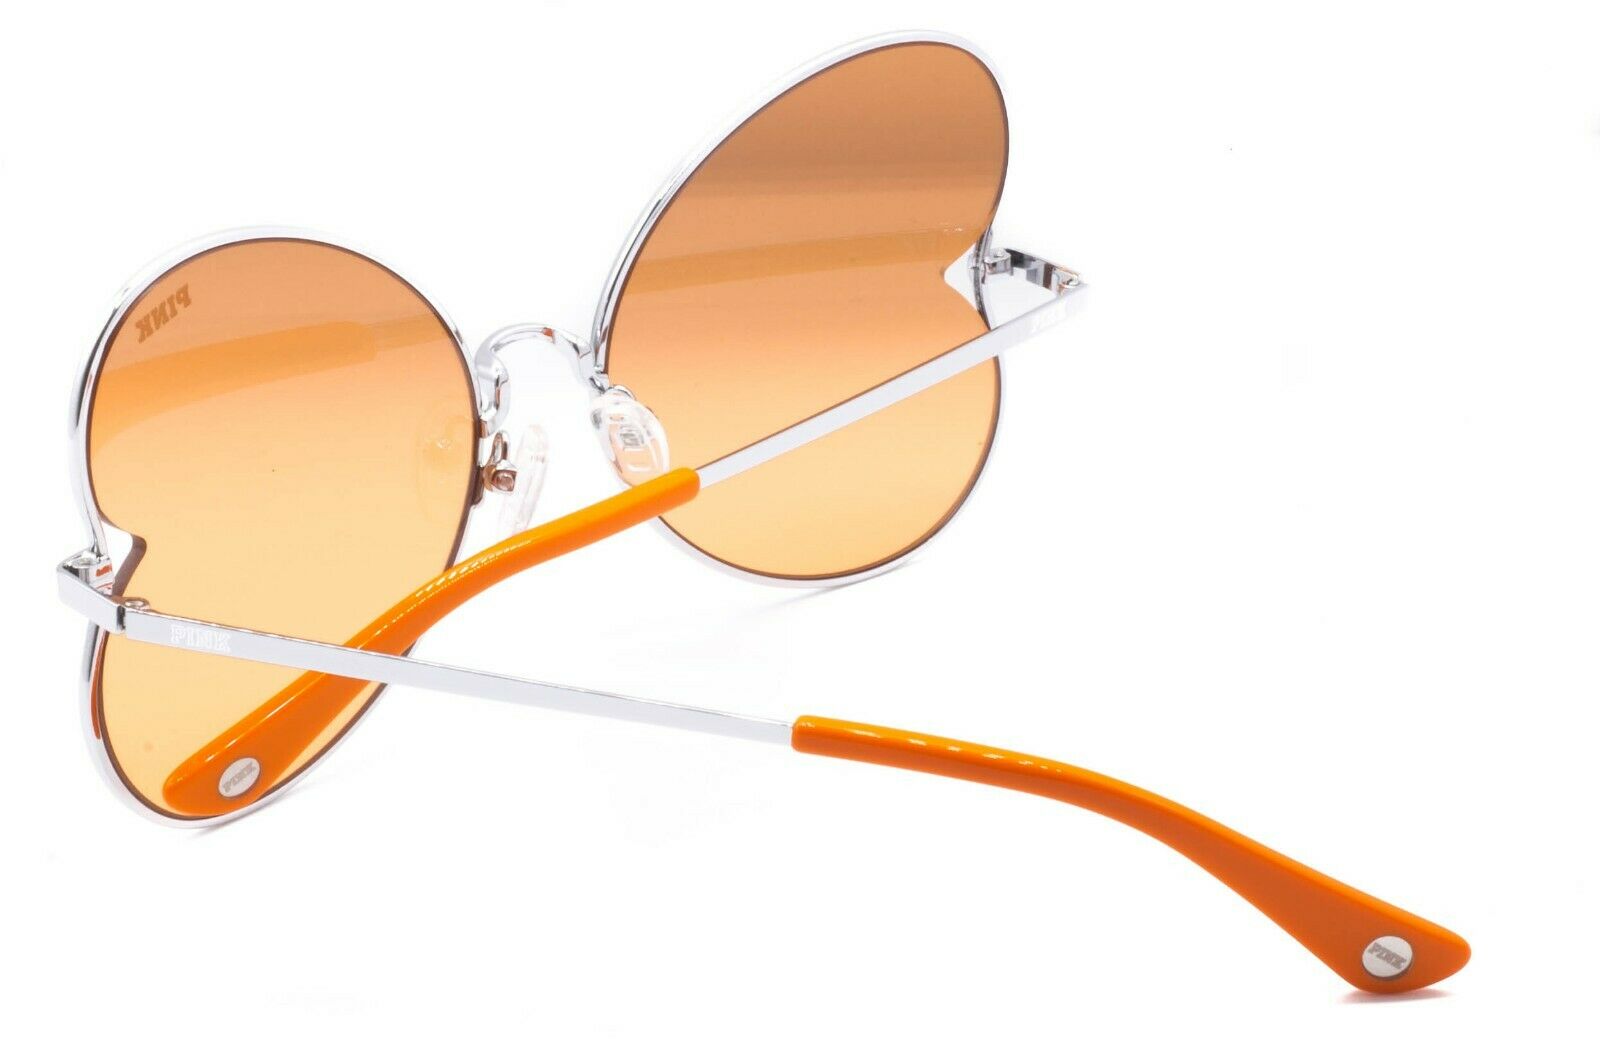 PINK VICTORIA'S SECRET PK0012 16F *1 59mm Sunglasses Eyewear Shades Frames - New